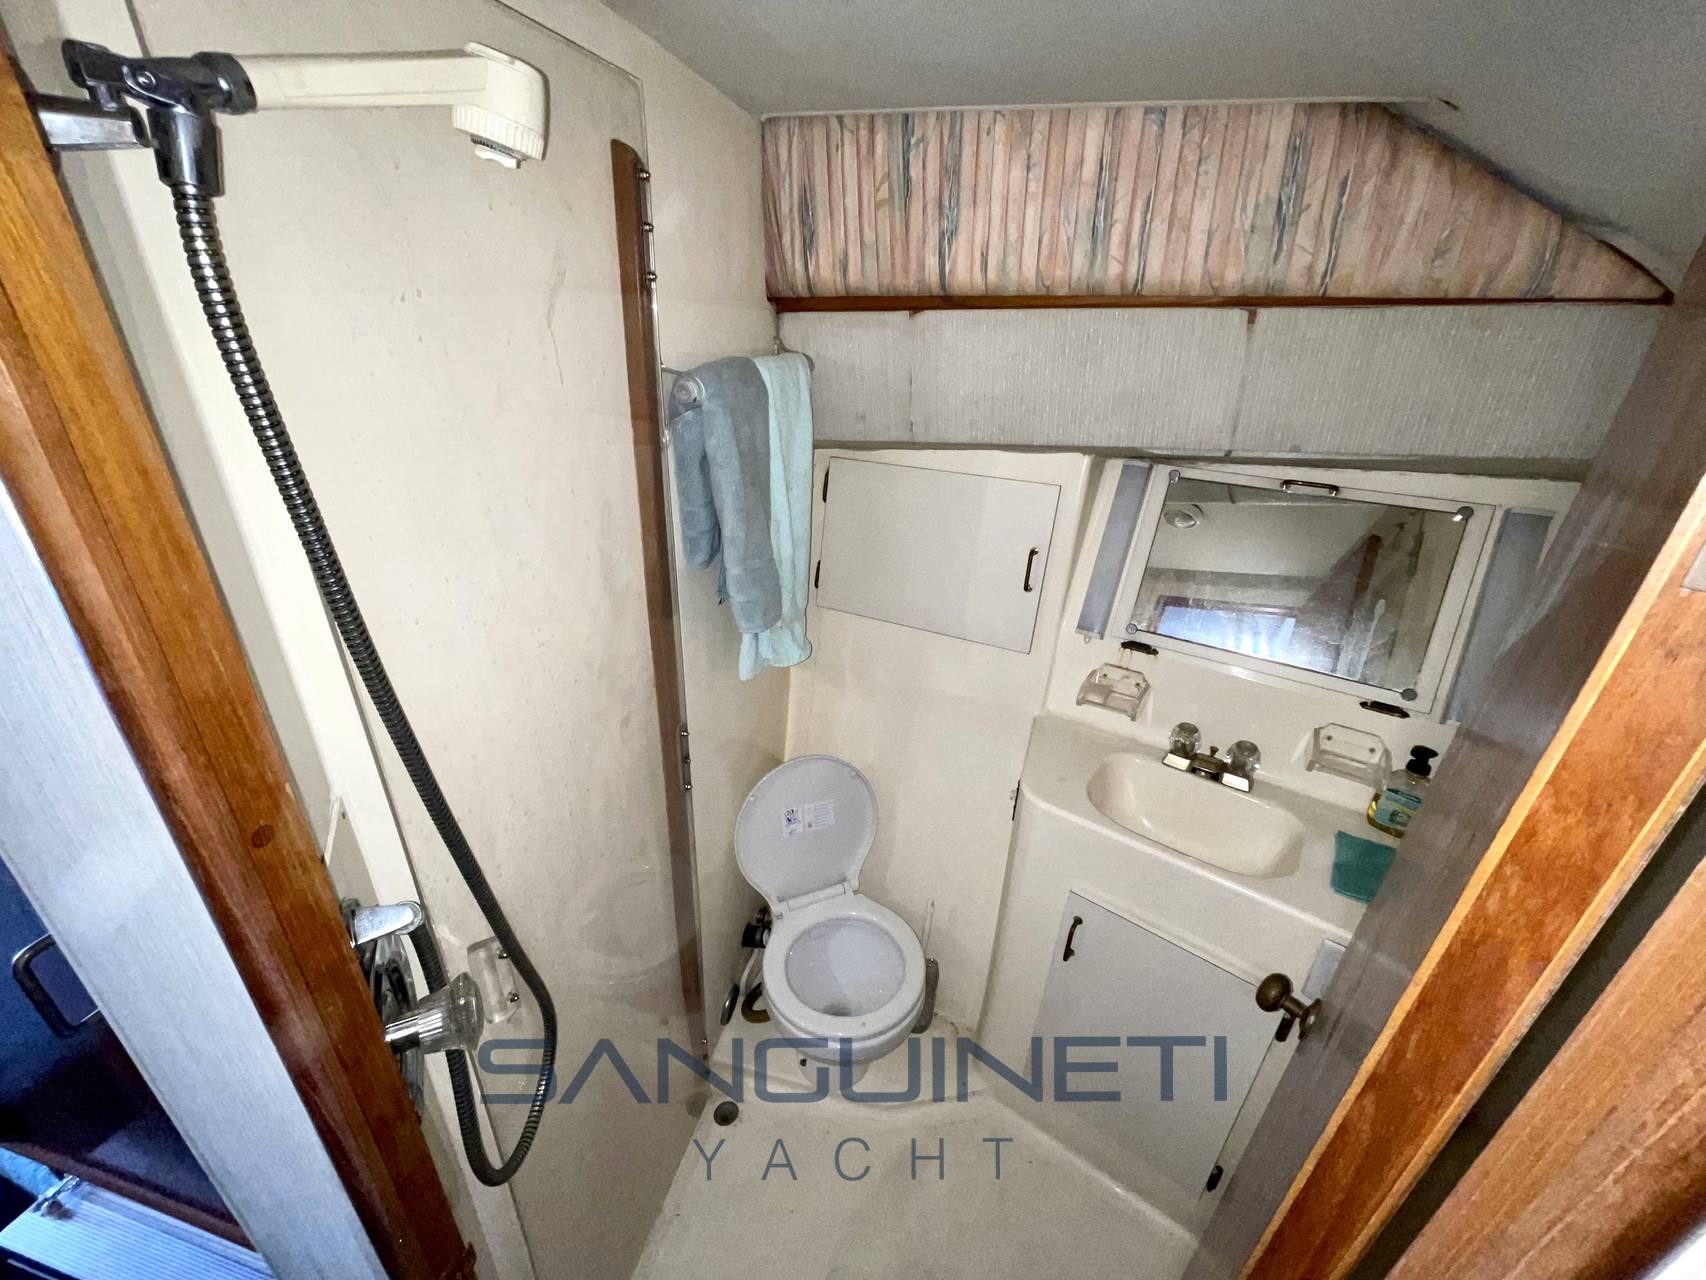 Ocean Yacht 32 super sport Hygienic service